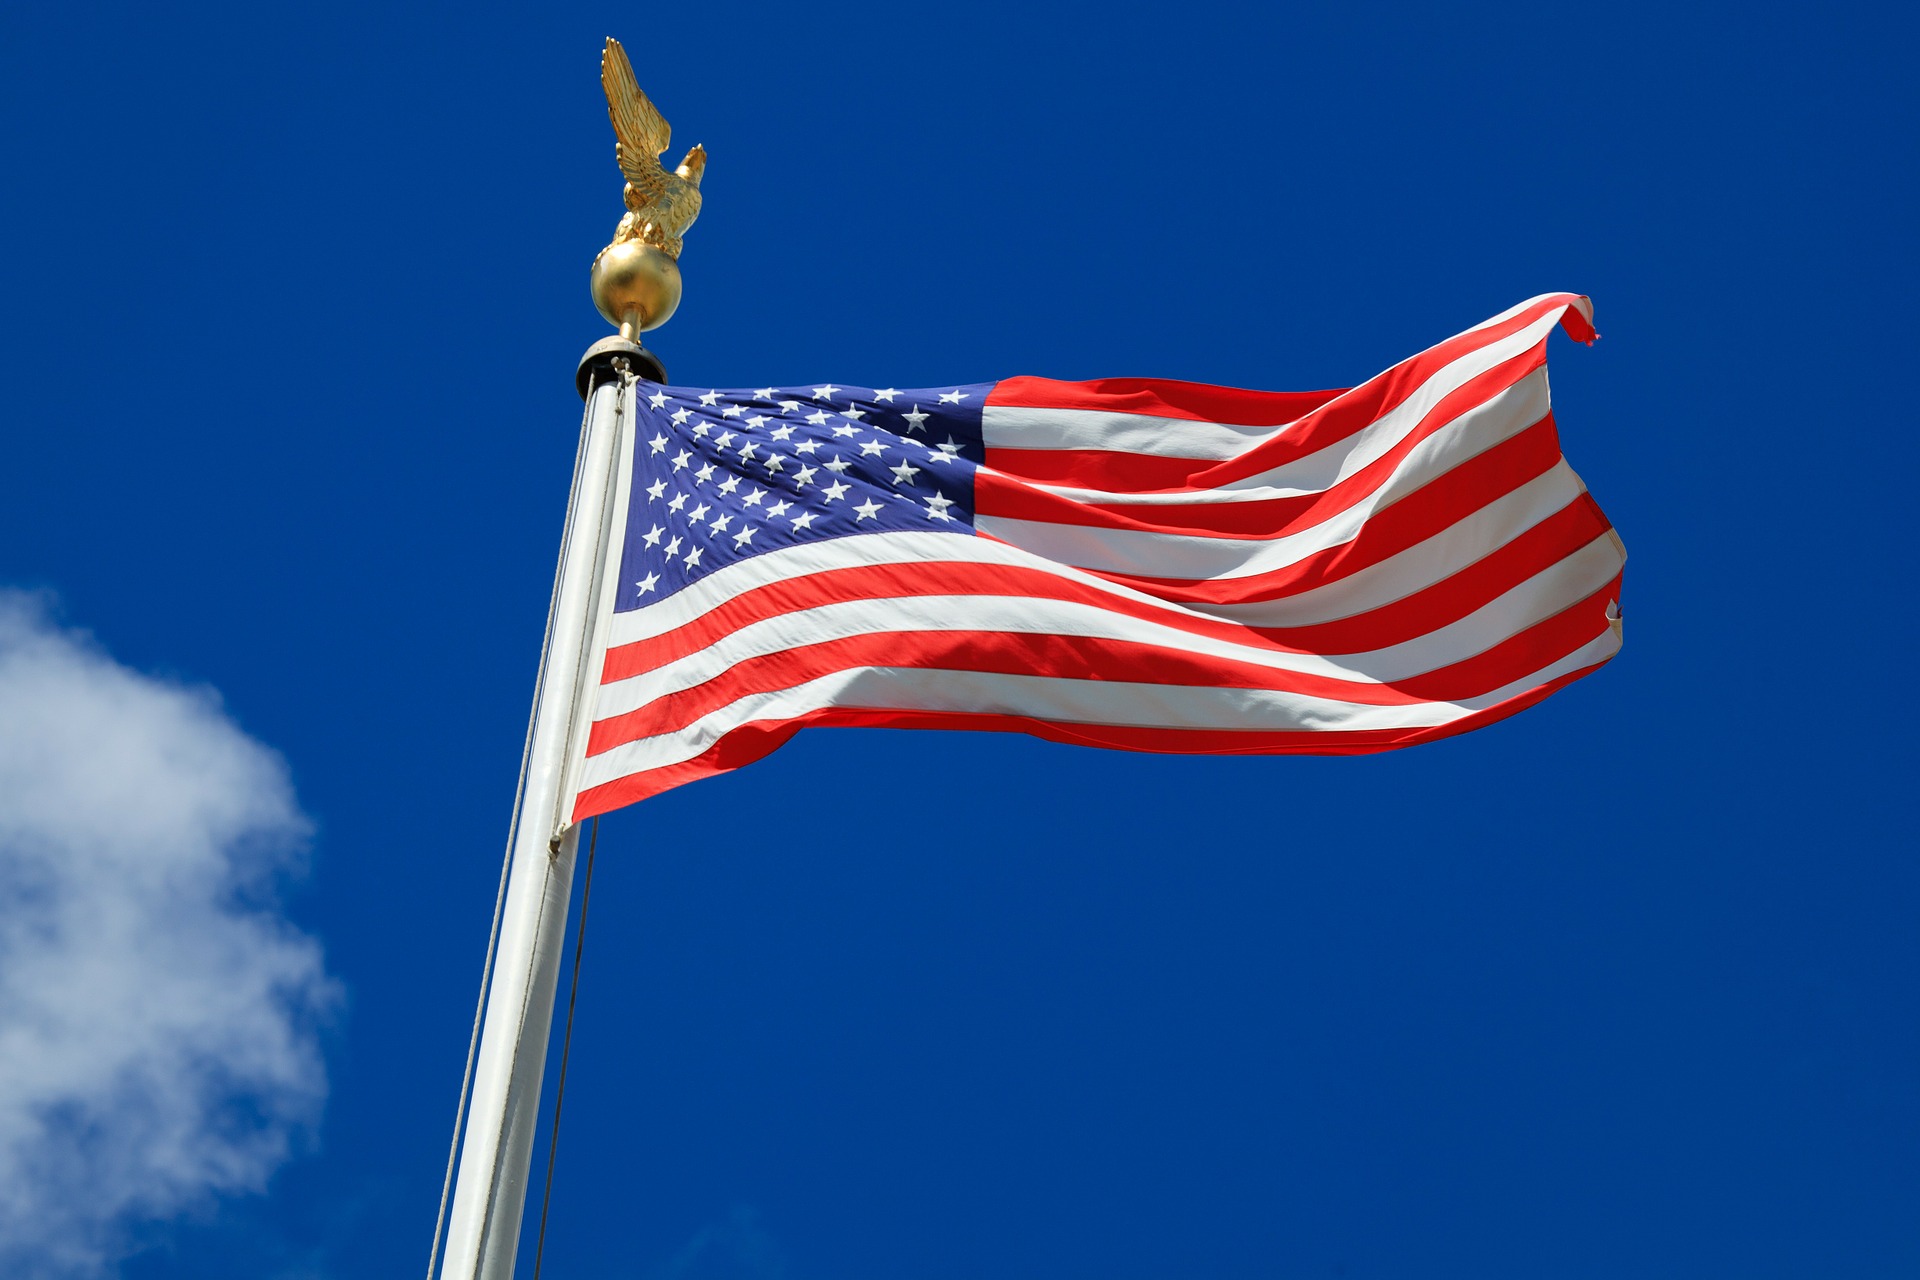 American-Flag-on-pole-with-eagle.jpg